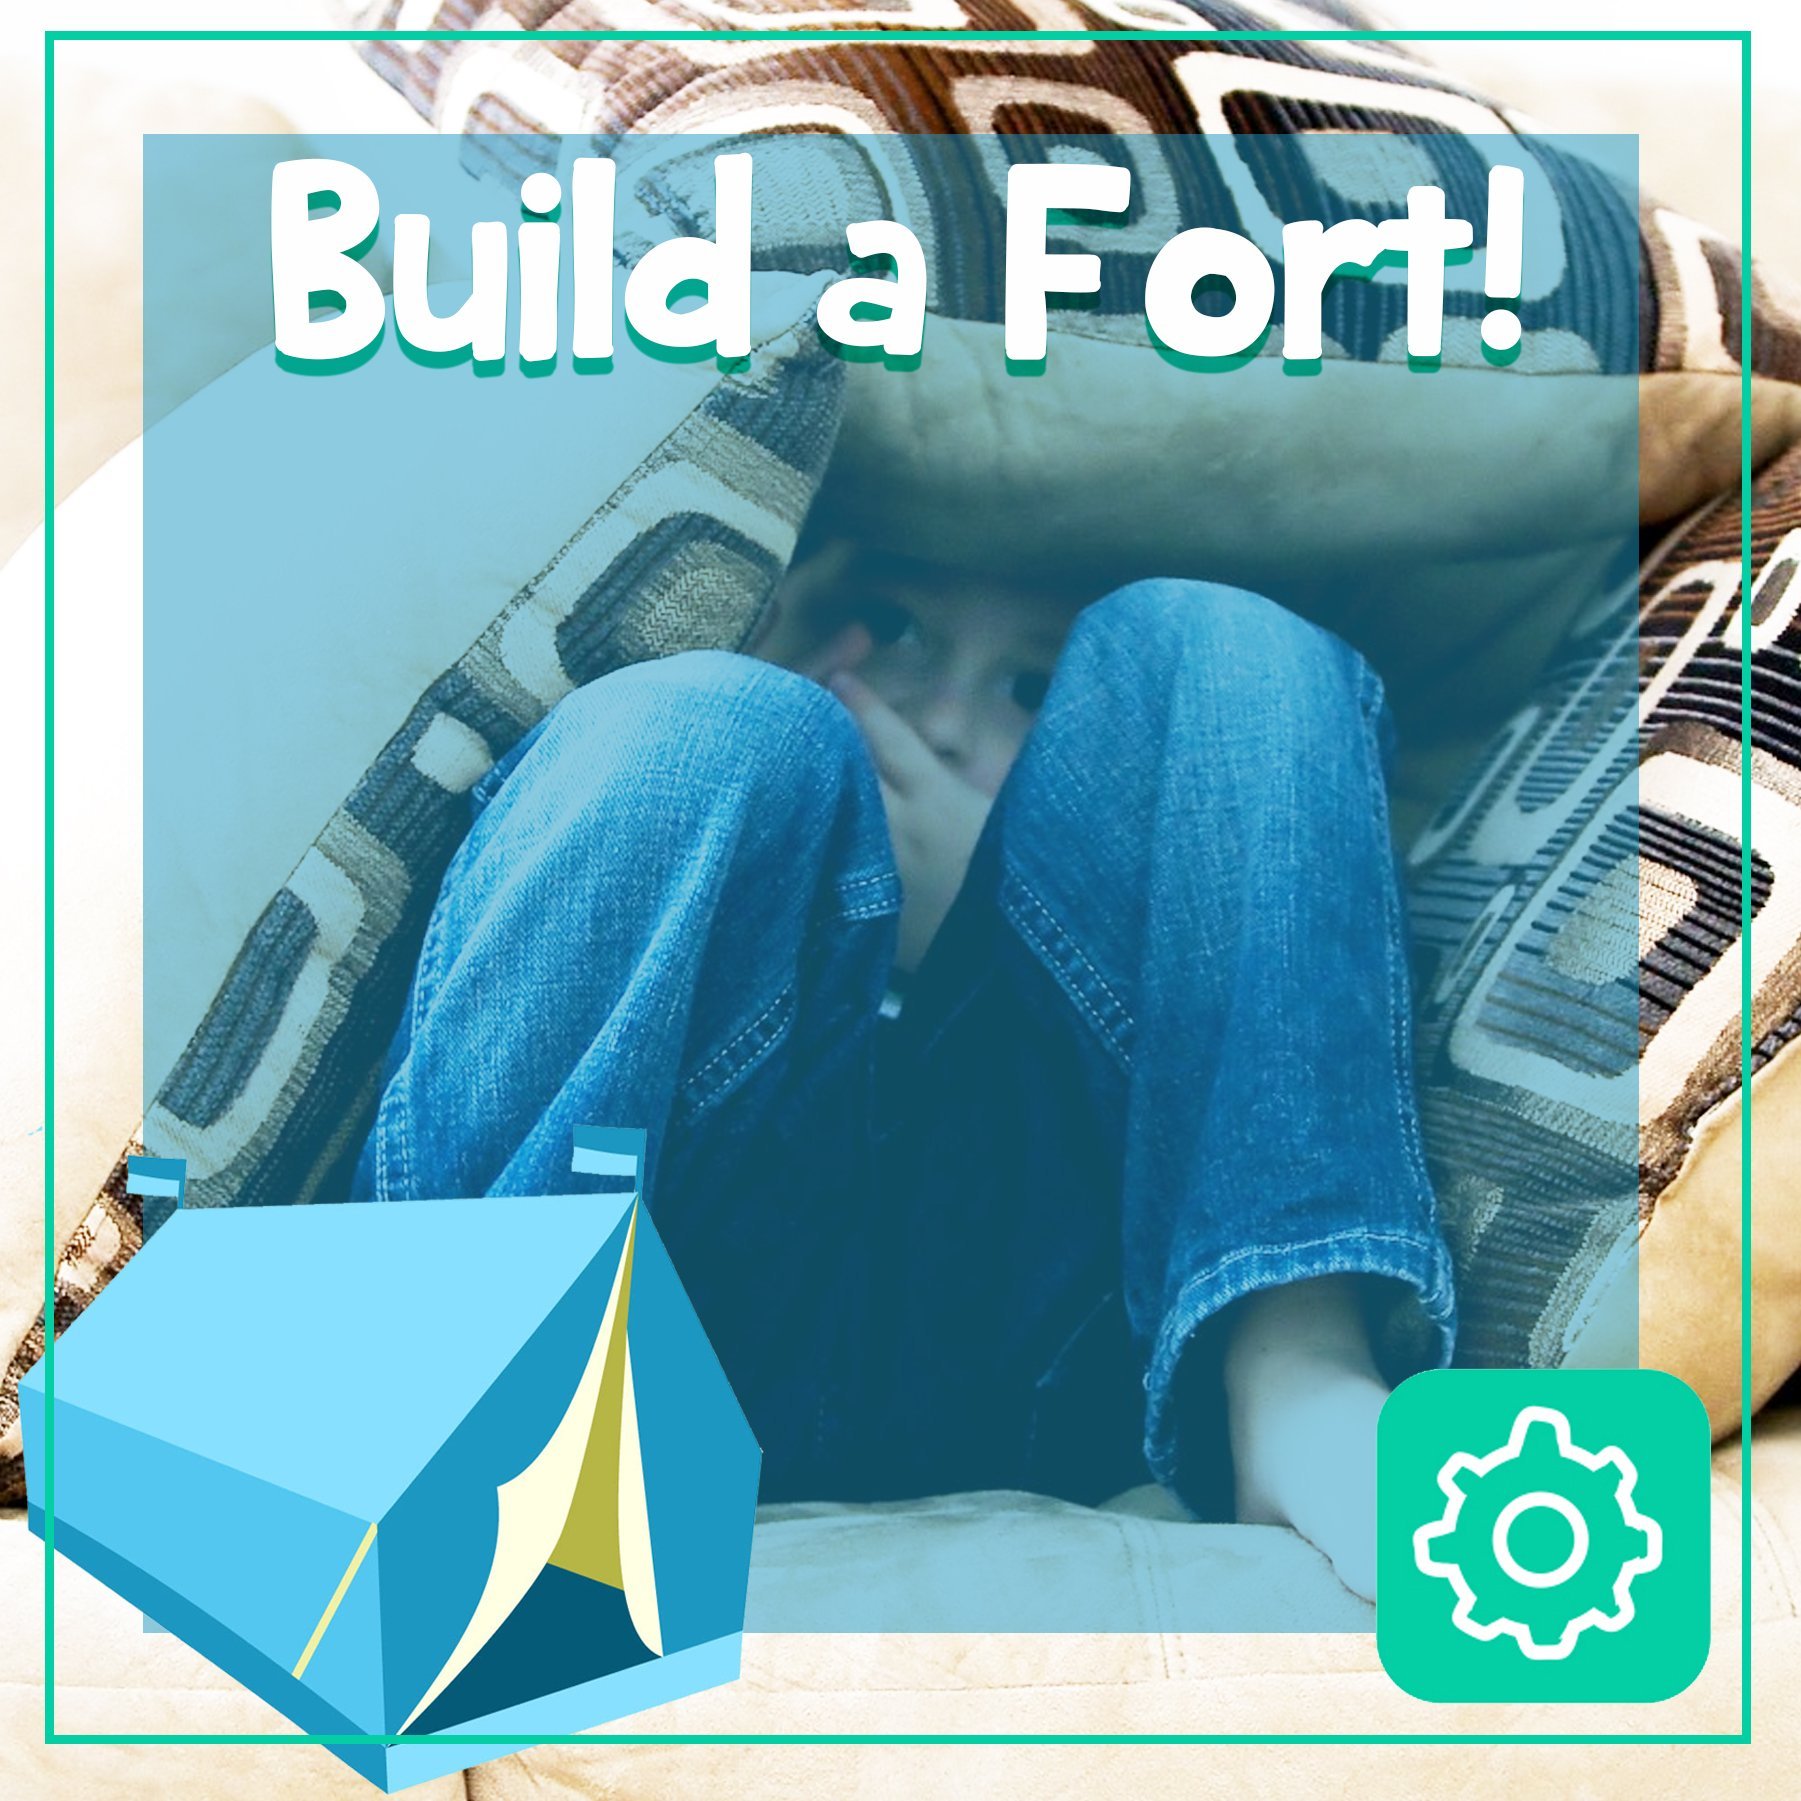 Build a Fort Challenge